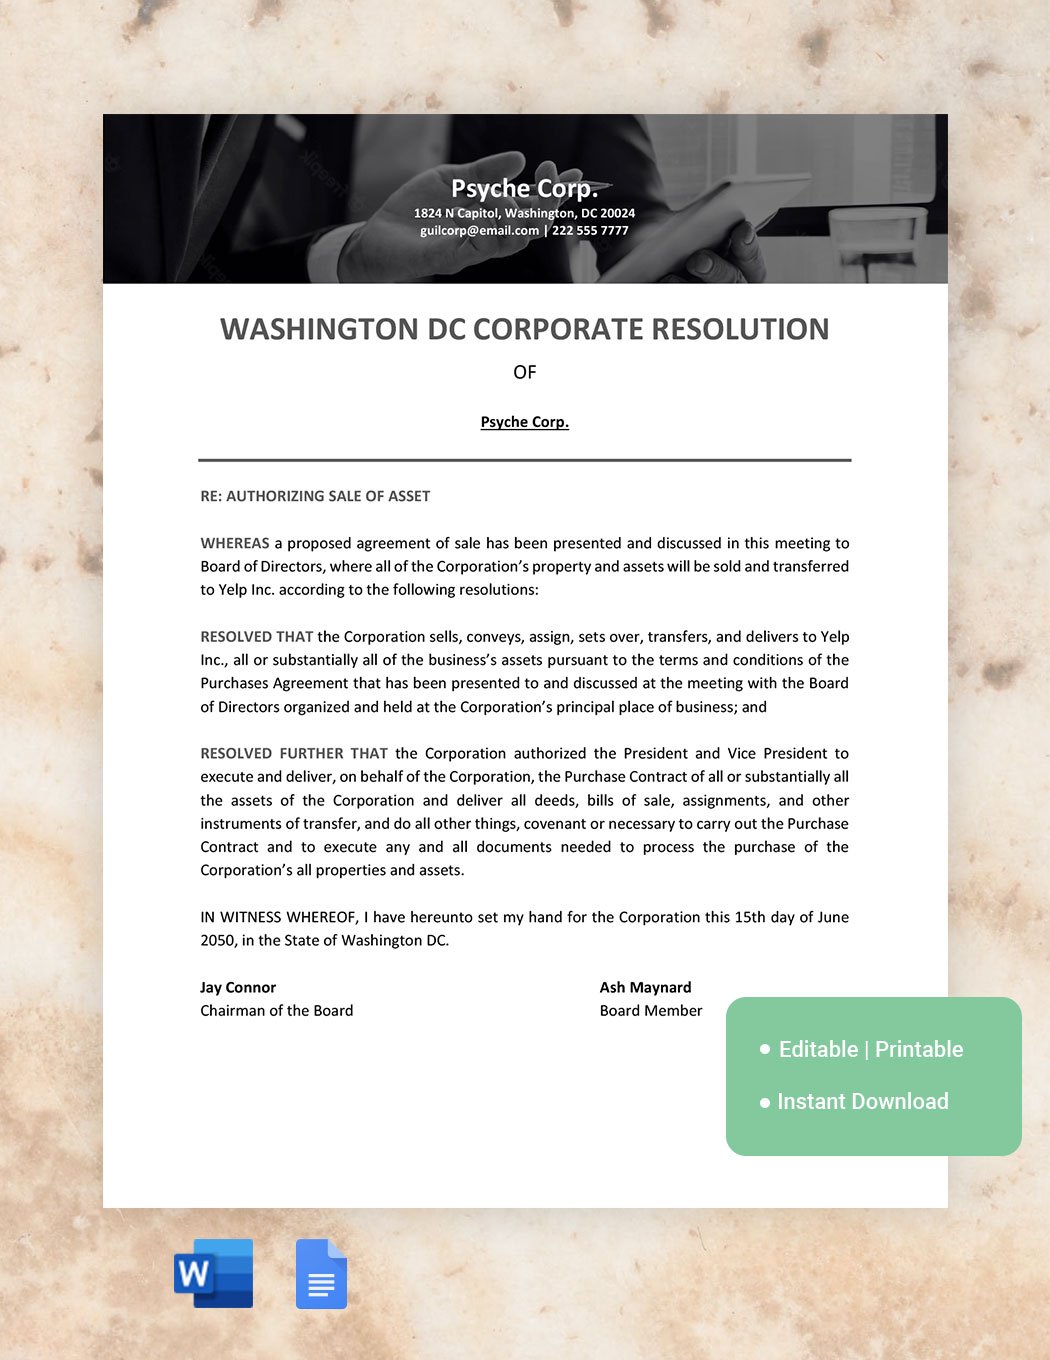 Washington DC Corporate Resolution Template in Word, Google Docs